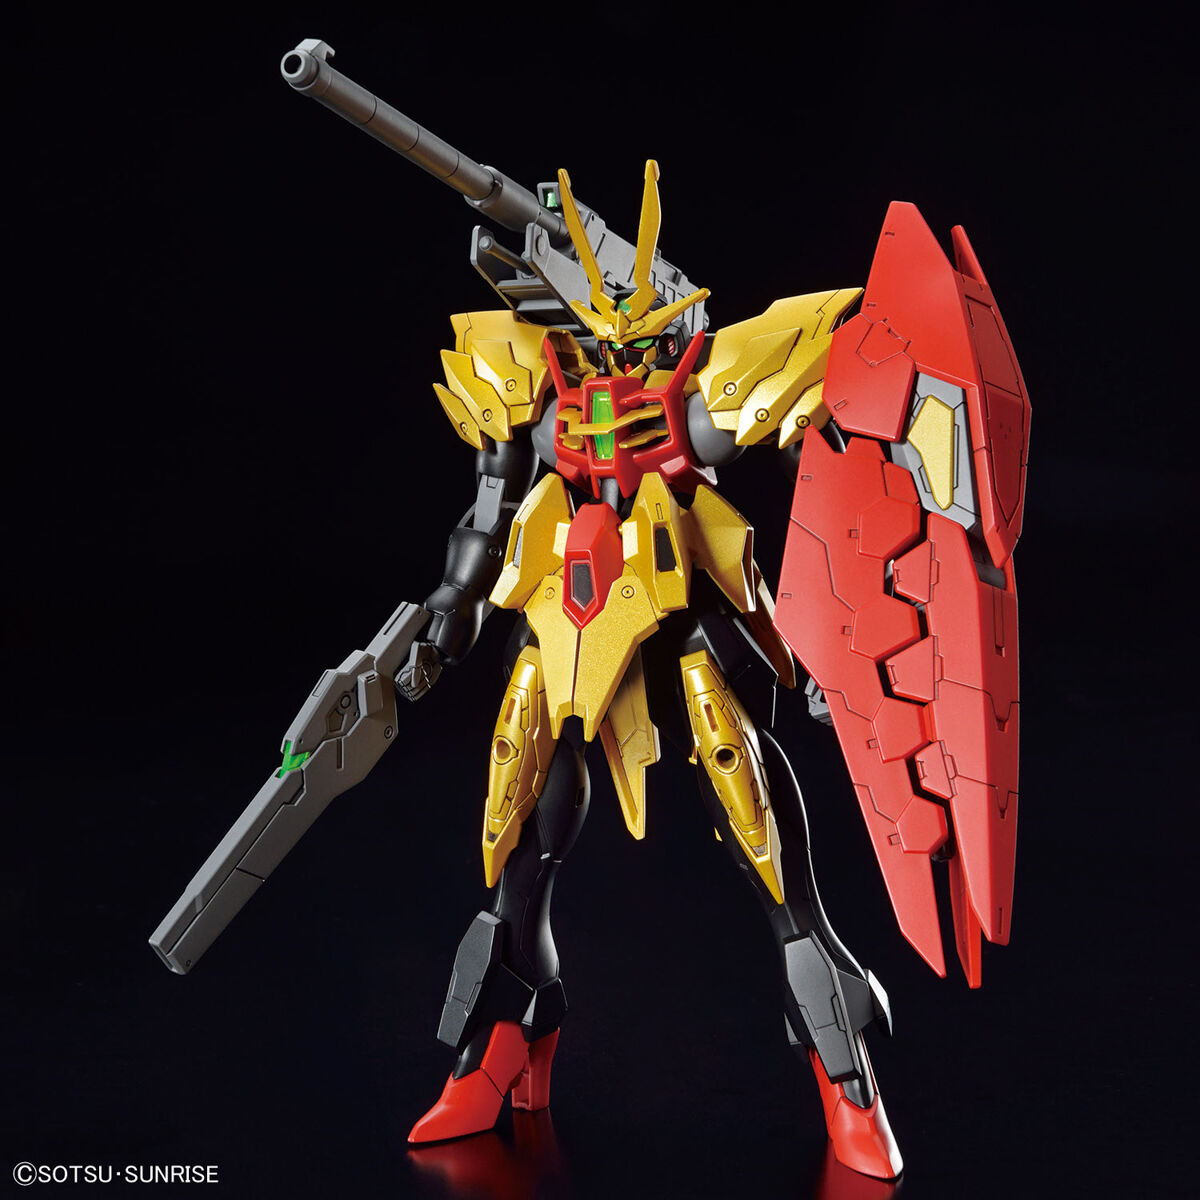 Gunpla 1/144 HG Typhoeus Gundam Chimera-Bandai-Ace Cards &amp; Collectibles